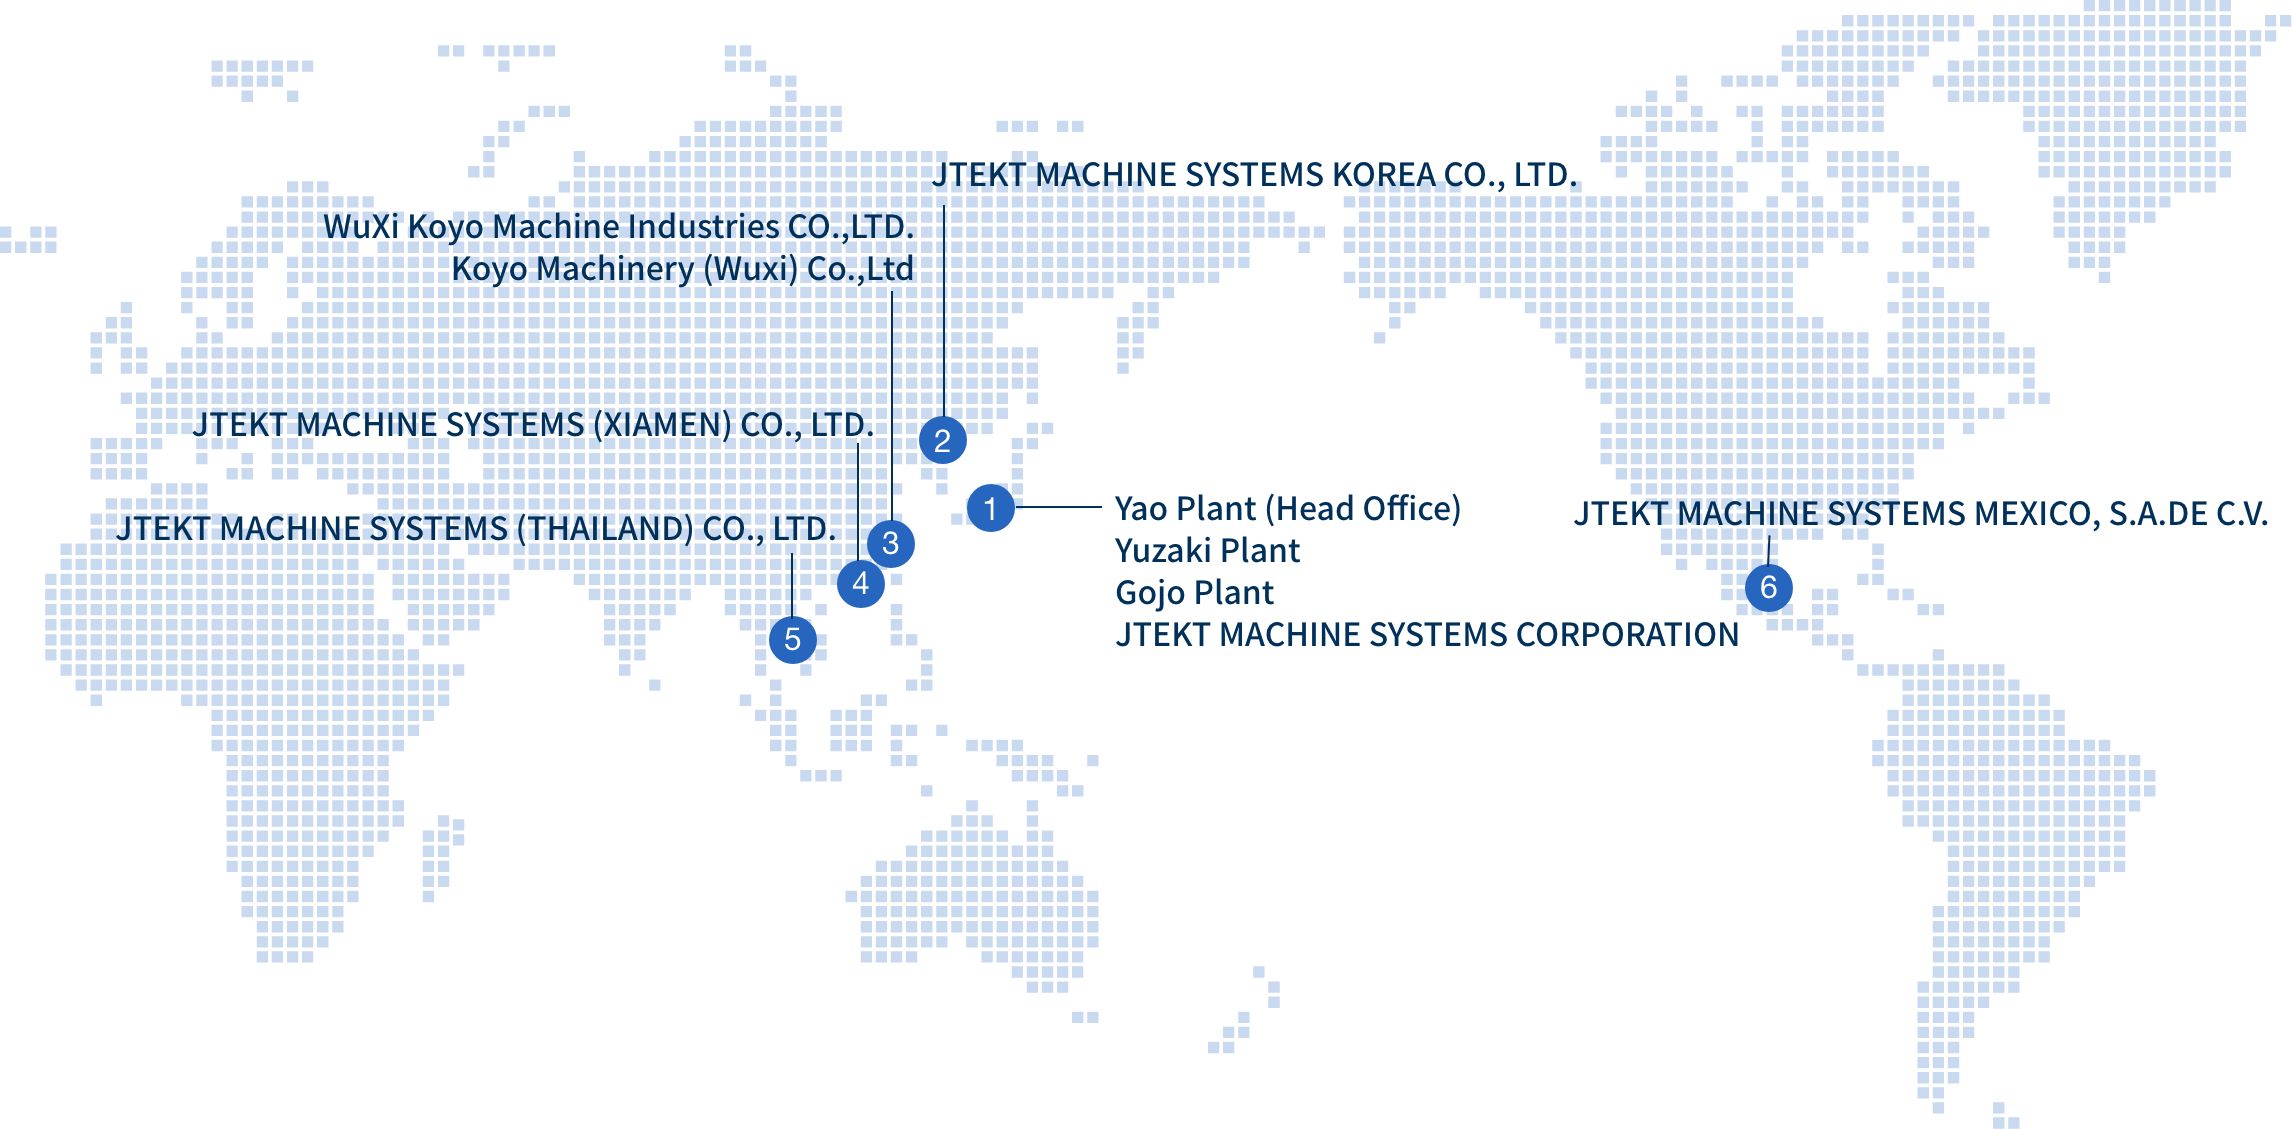 KOYO MACHINE INDUSTRIES CO.,LTD. Production Sites and Affiliates